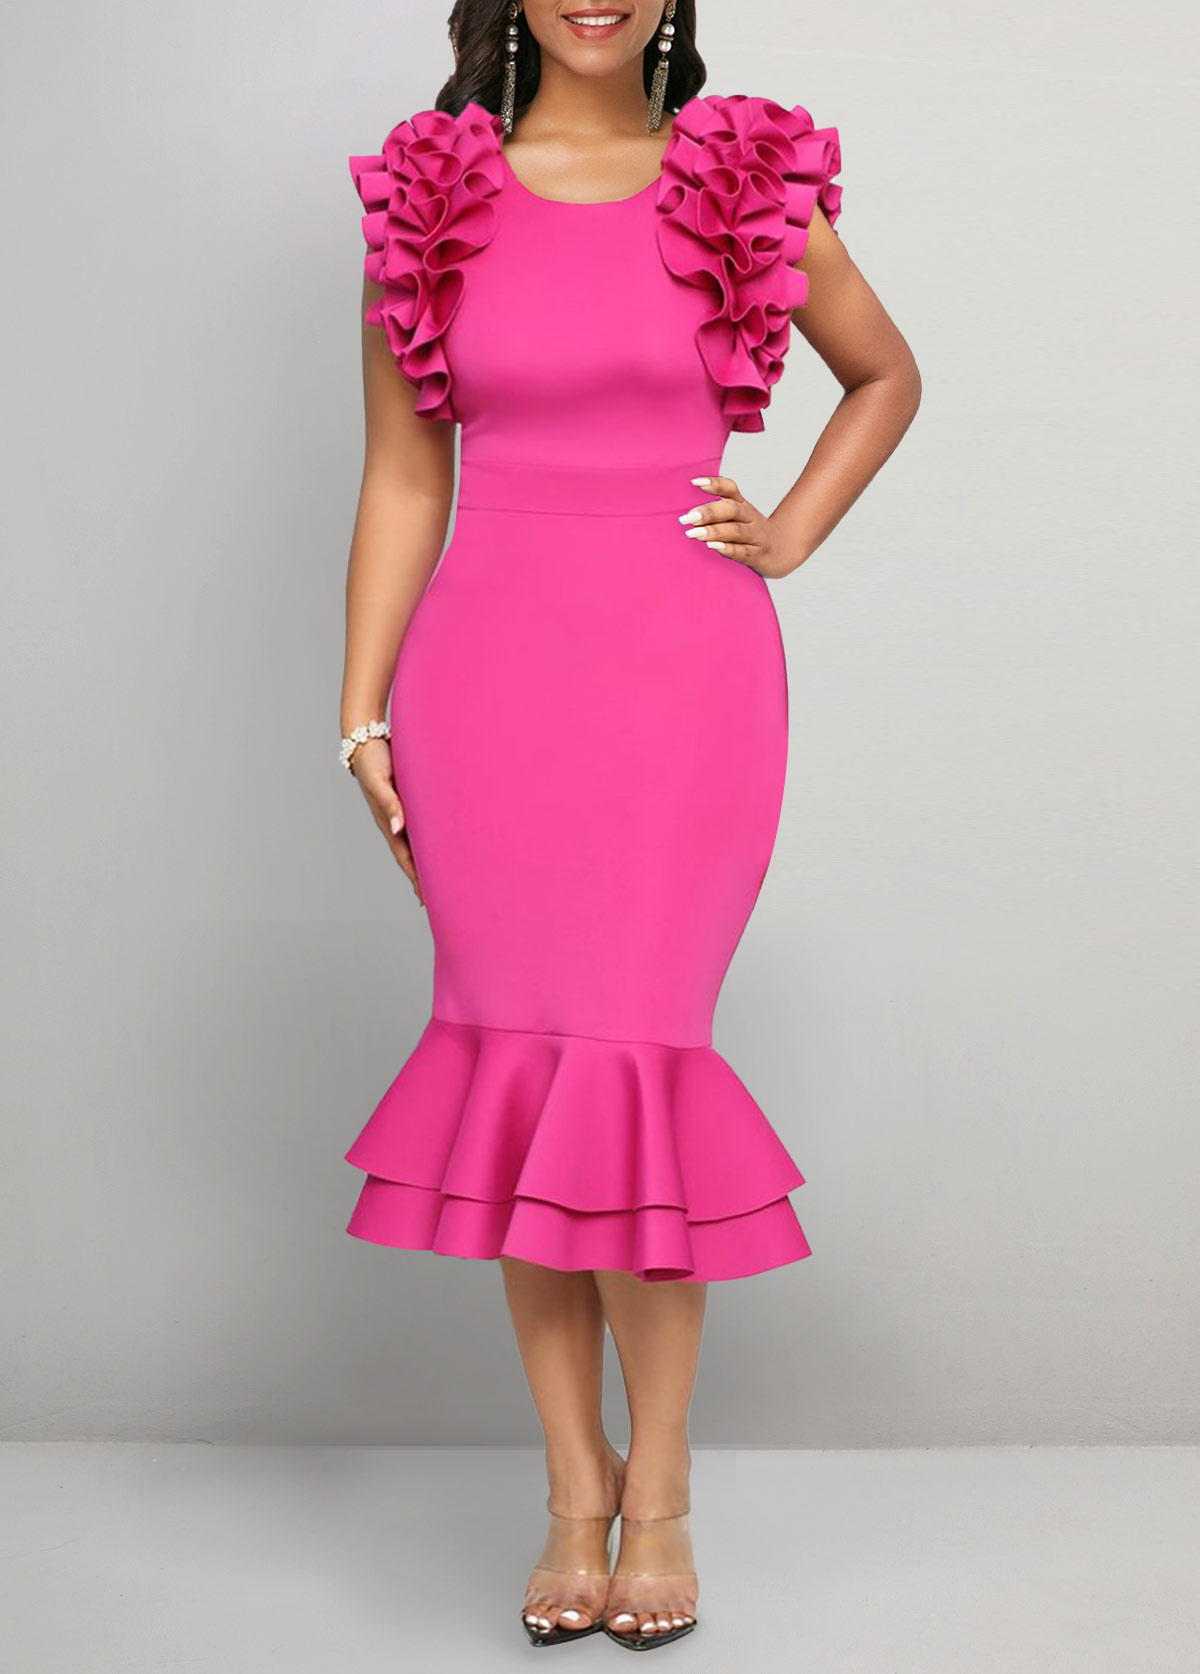 Ruffle Round Neck Hot Pink Bodycon Dress